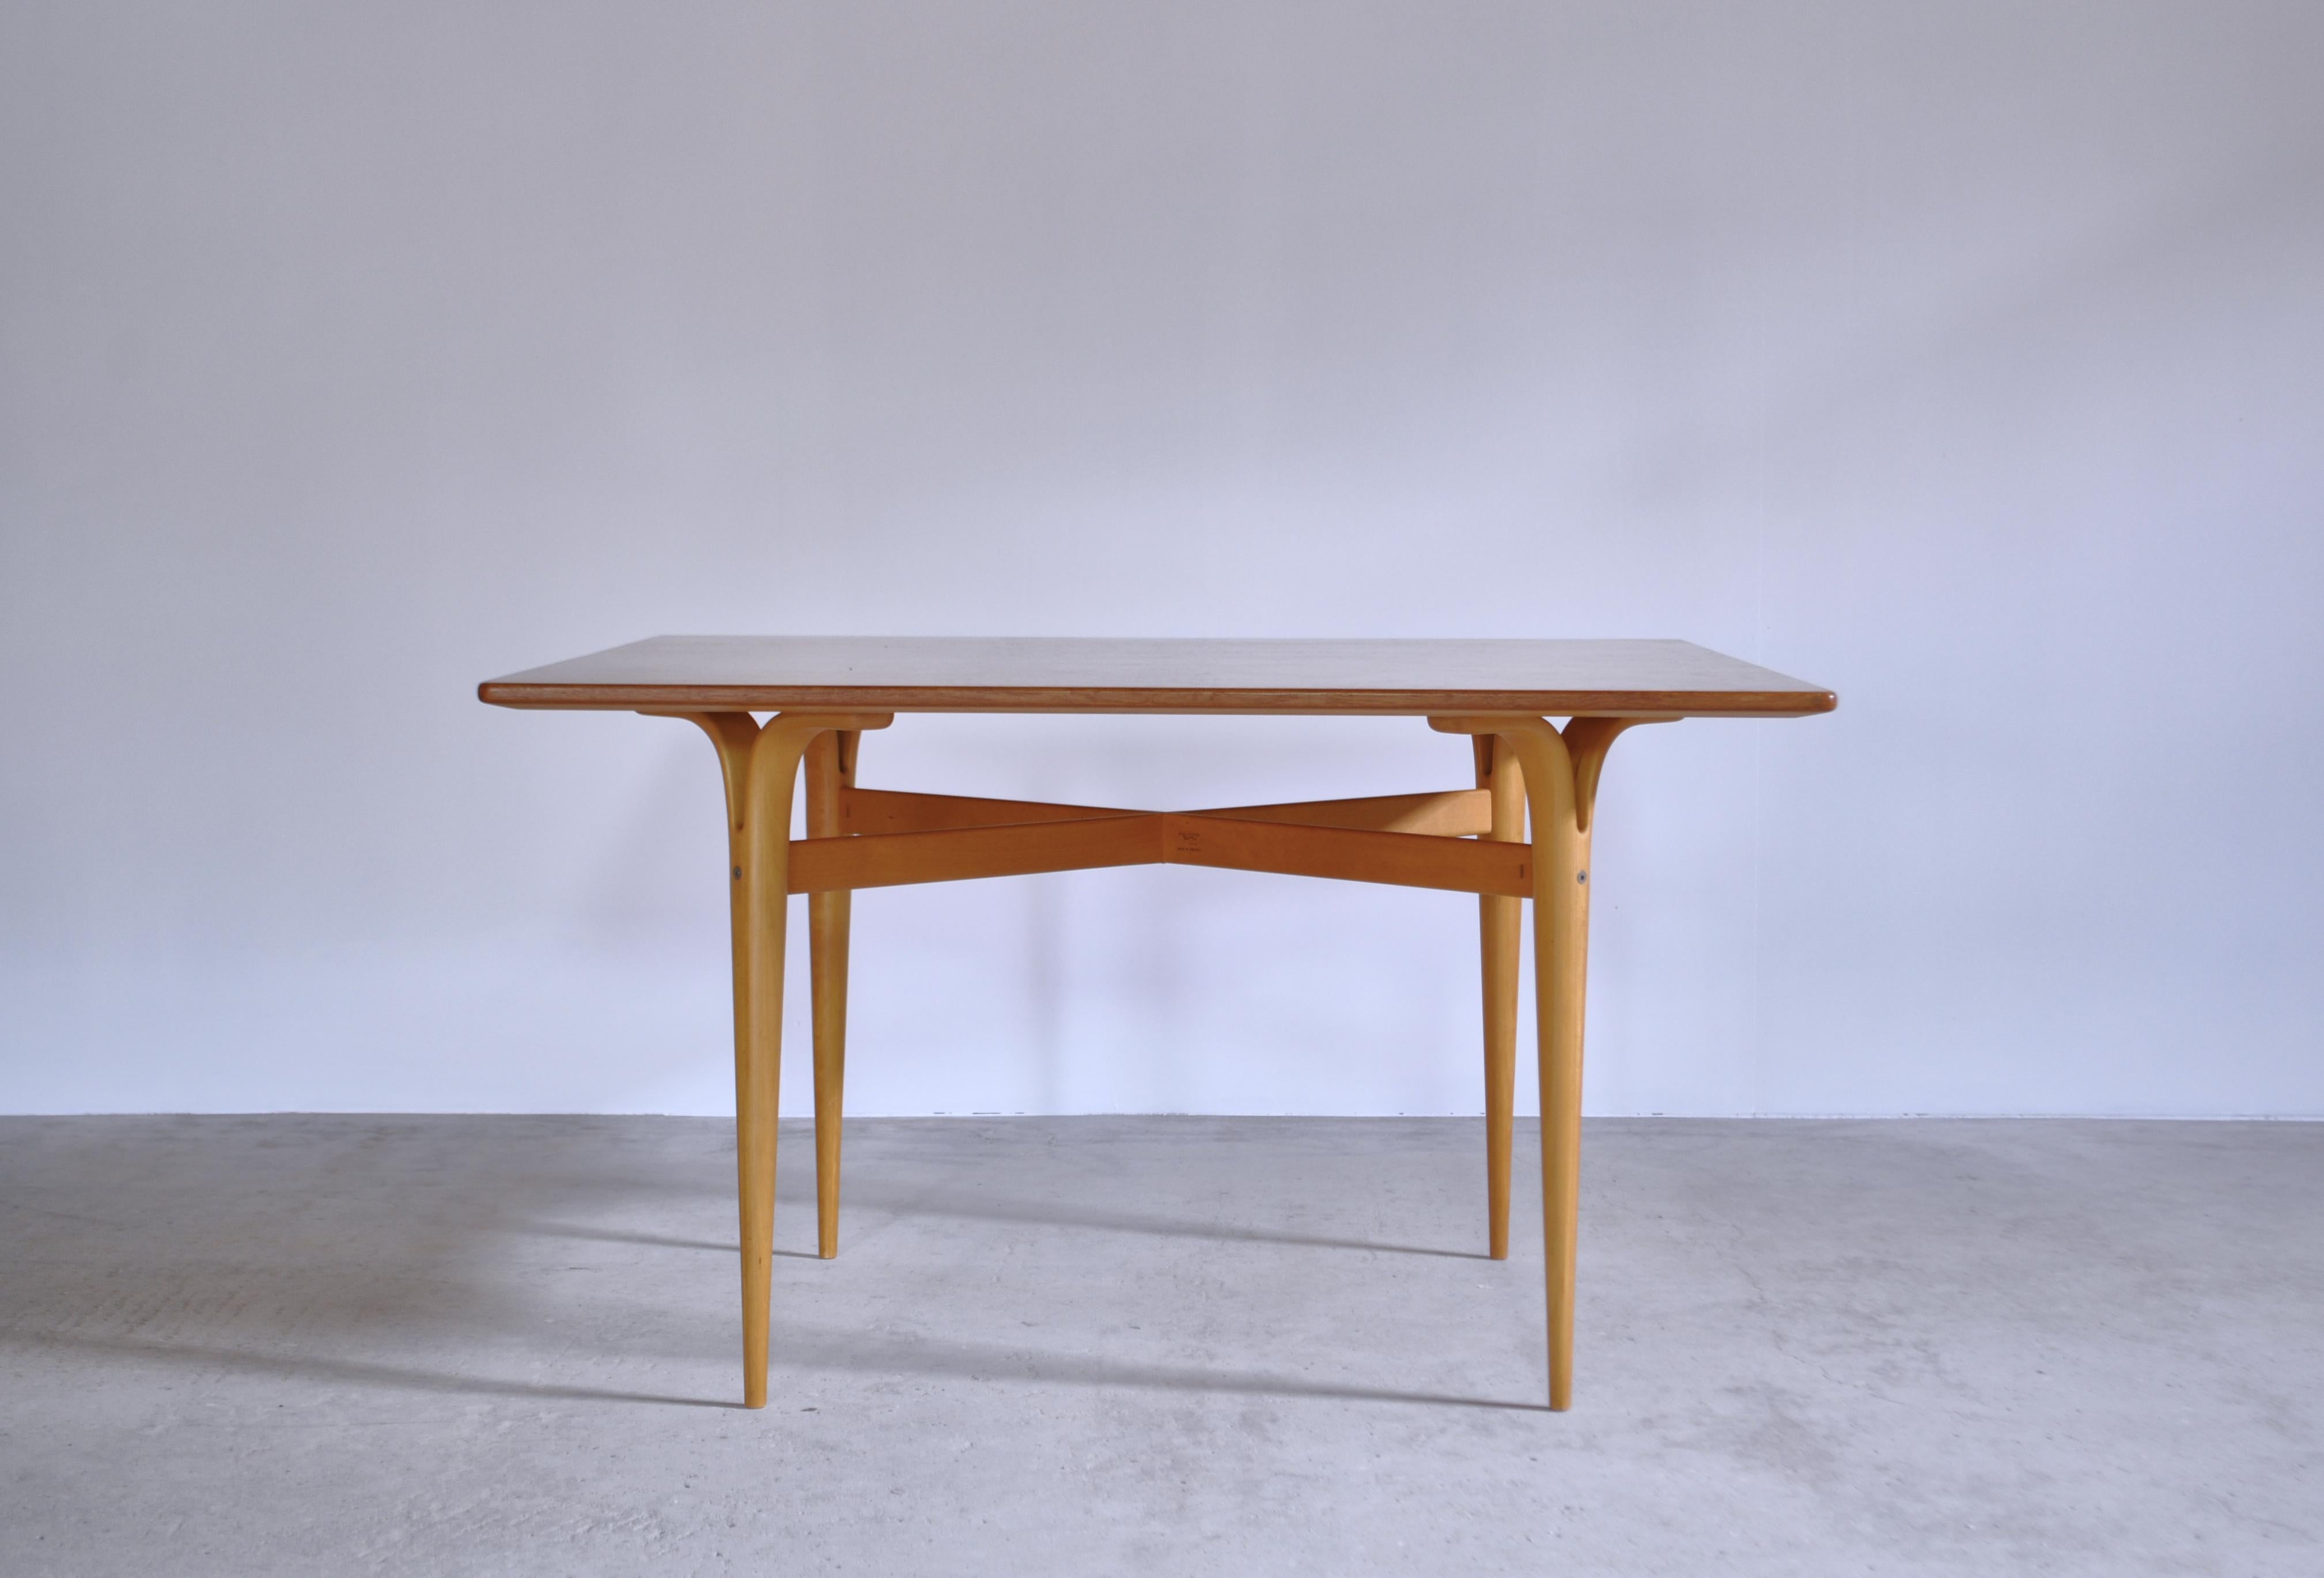 Birch Scandinavian Modern Cleft-Leg Table by Bruno Mathsson for Karl Mathsson, 1961